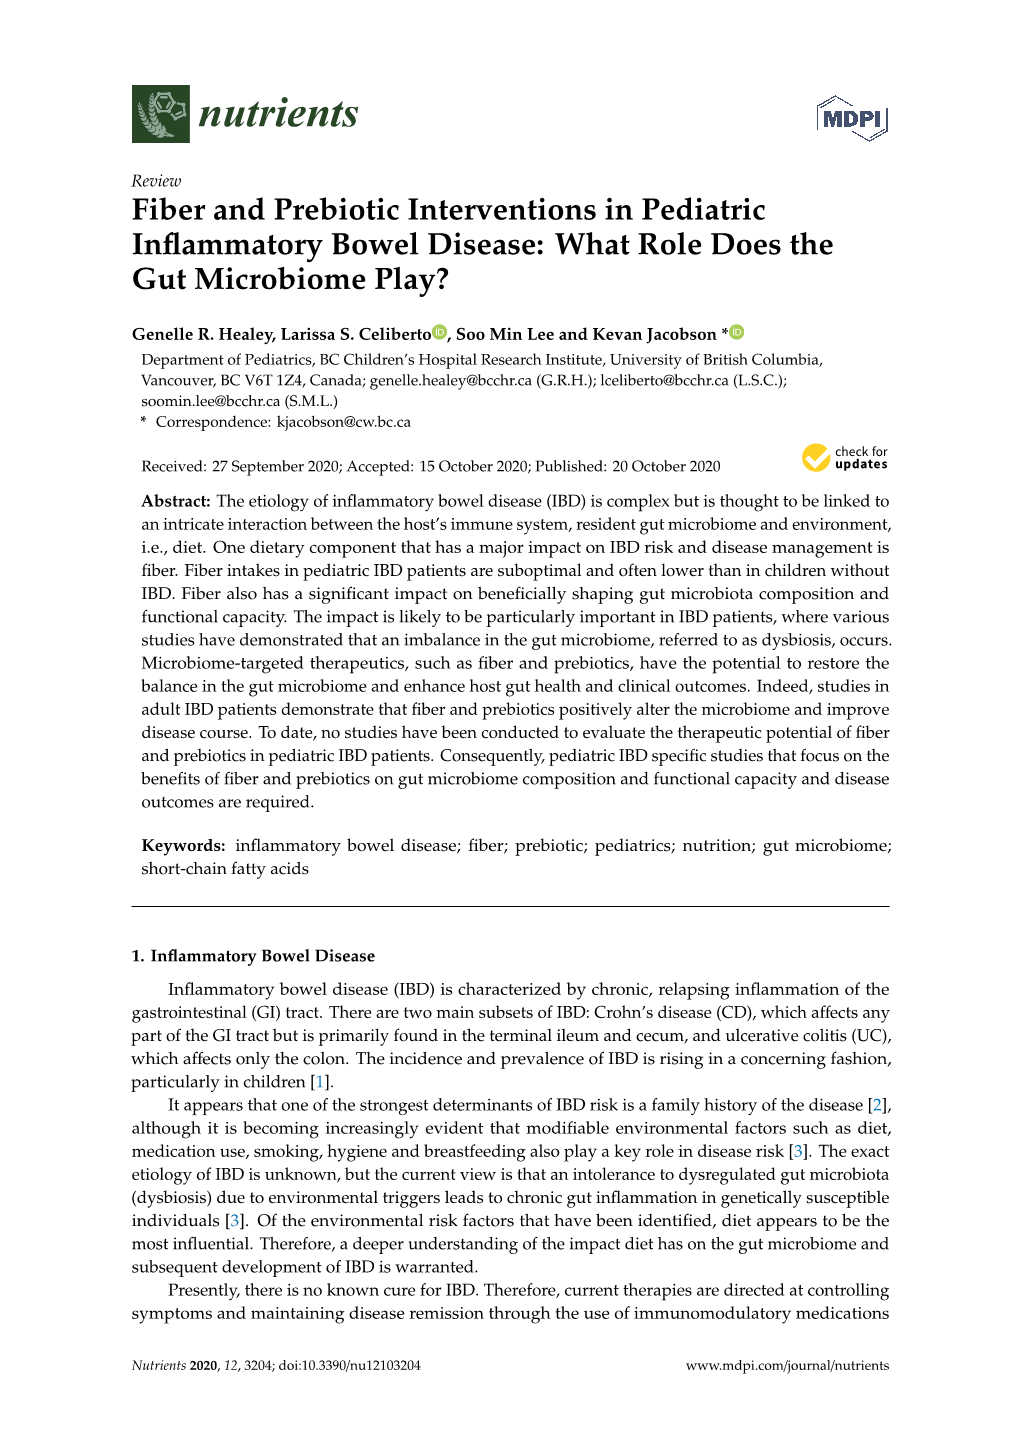 Fiber and Prebiotic Interventions in Pediatric Inflammatory Bowel Disease